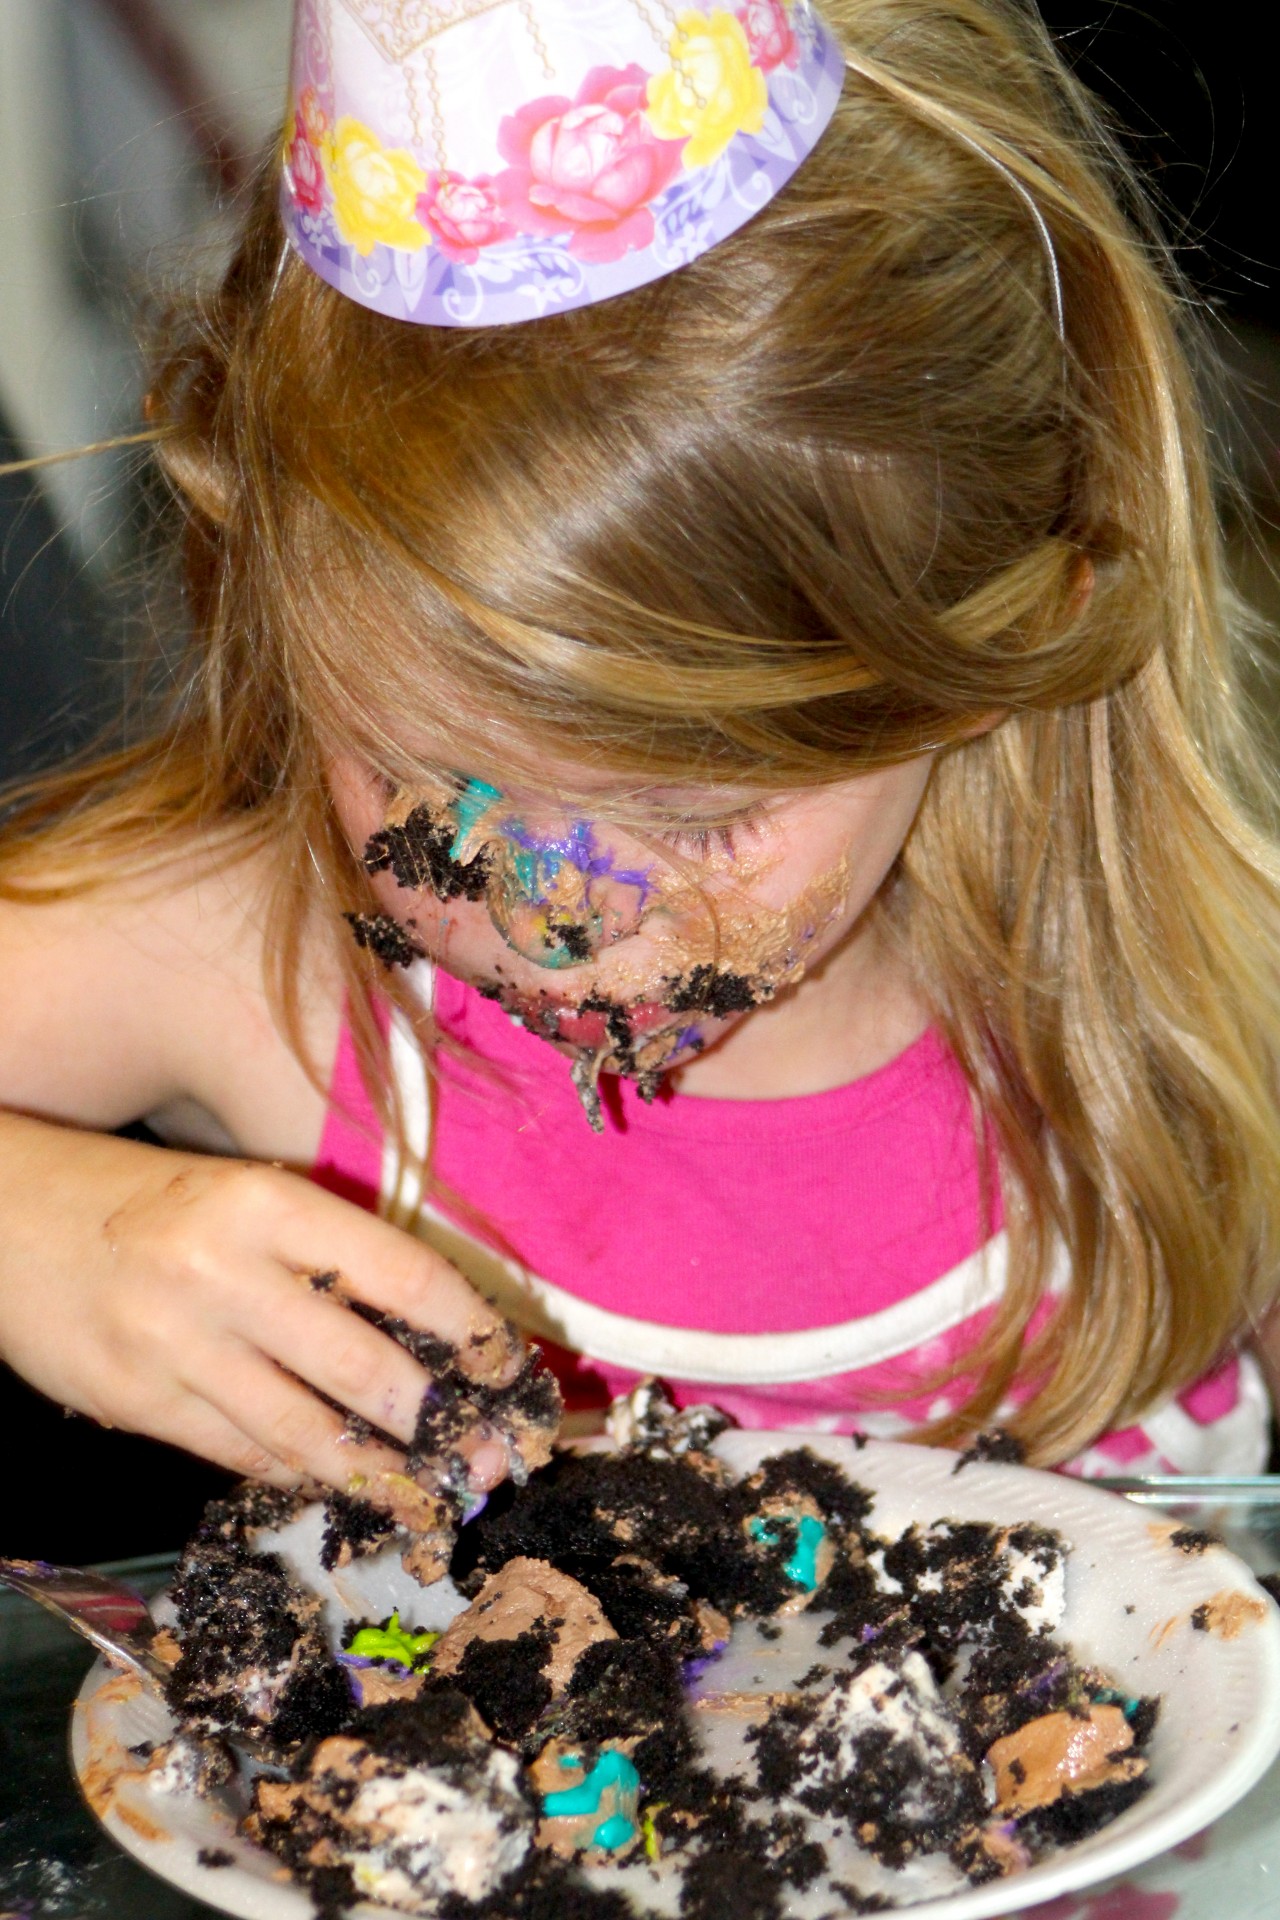 Birthday,eating,cake,kids,messes - free image from needpix.com